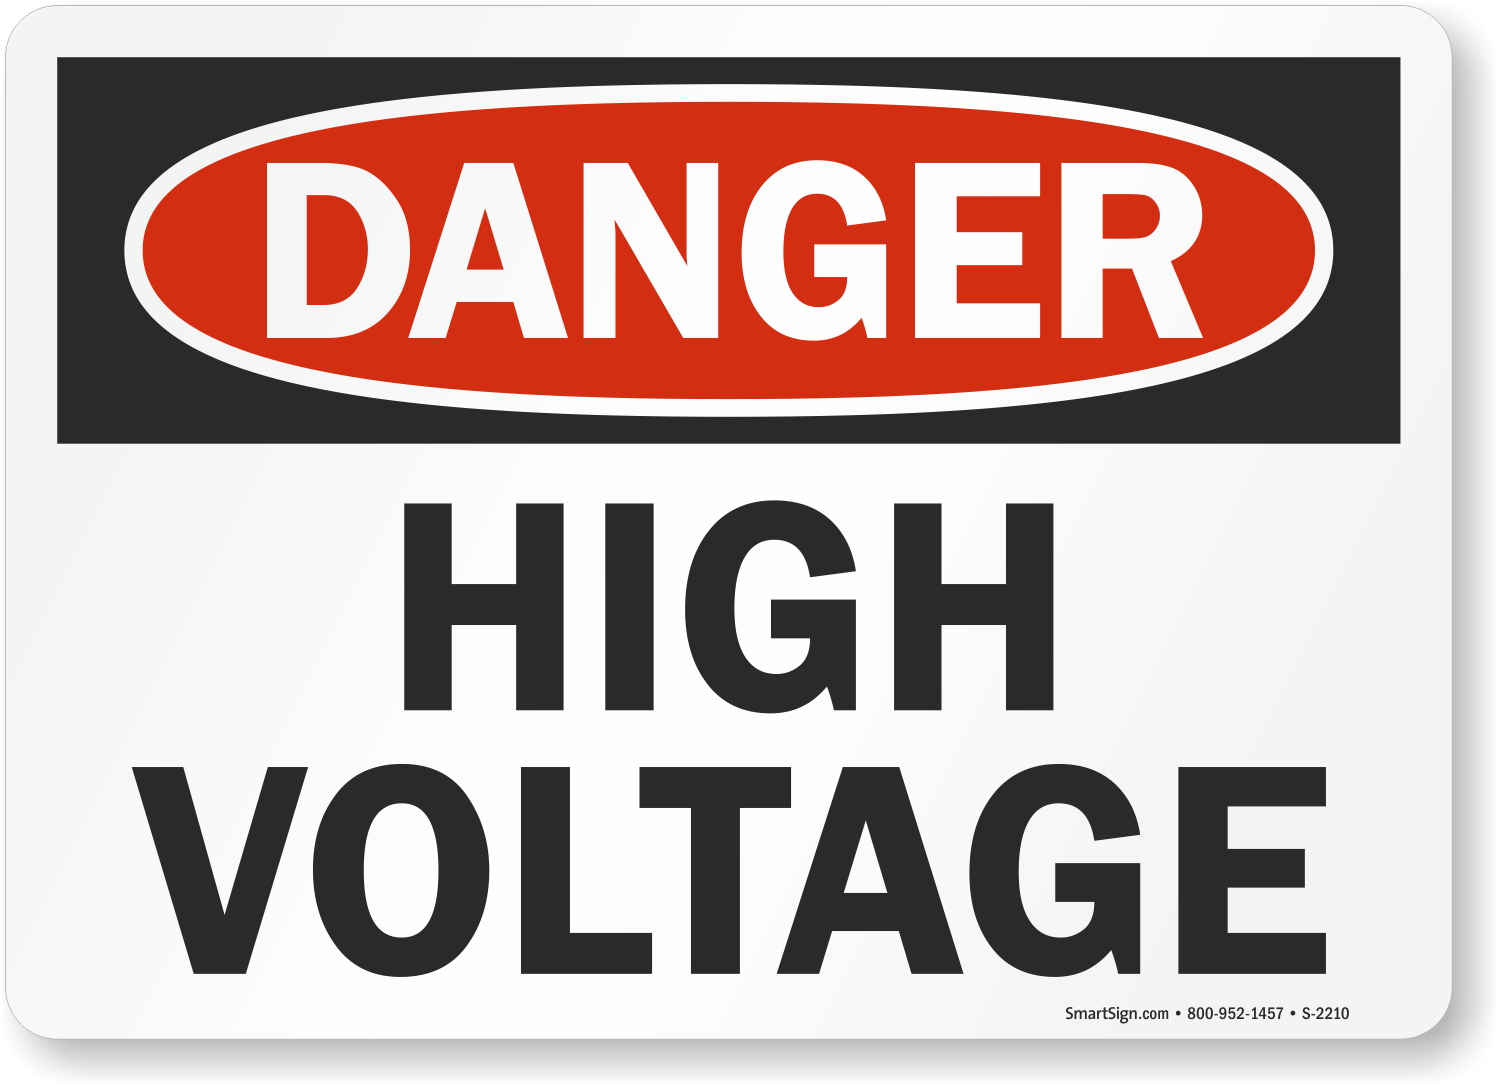 High Voltage Labels ⚡ Danger High Voltage Stickers